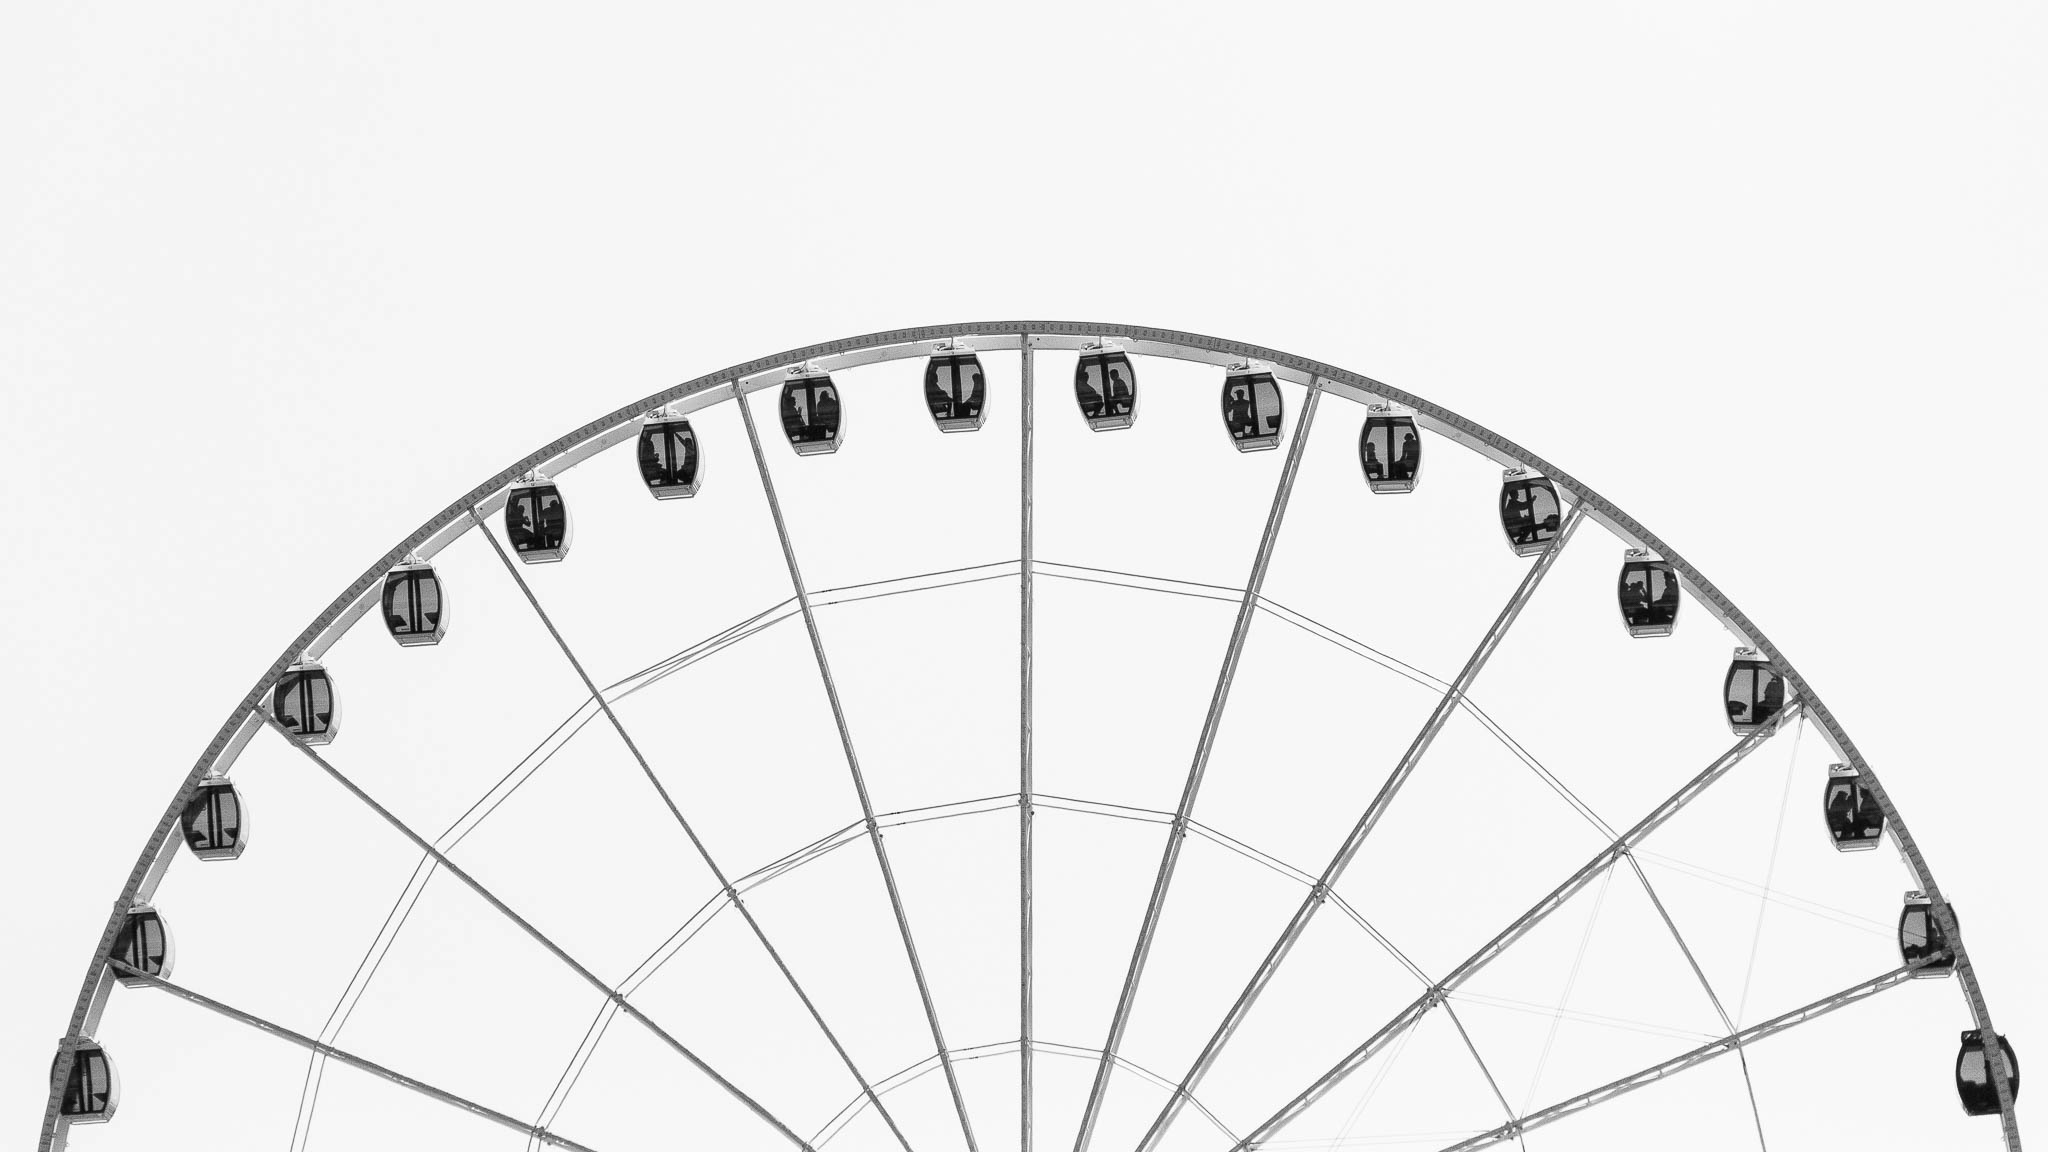 Symmetry of the Wheel